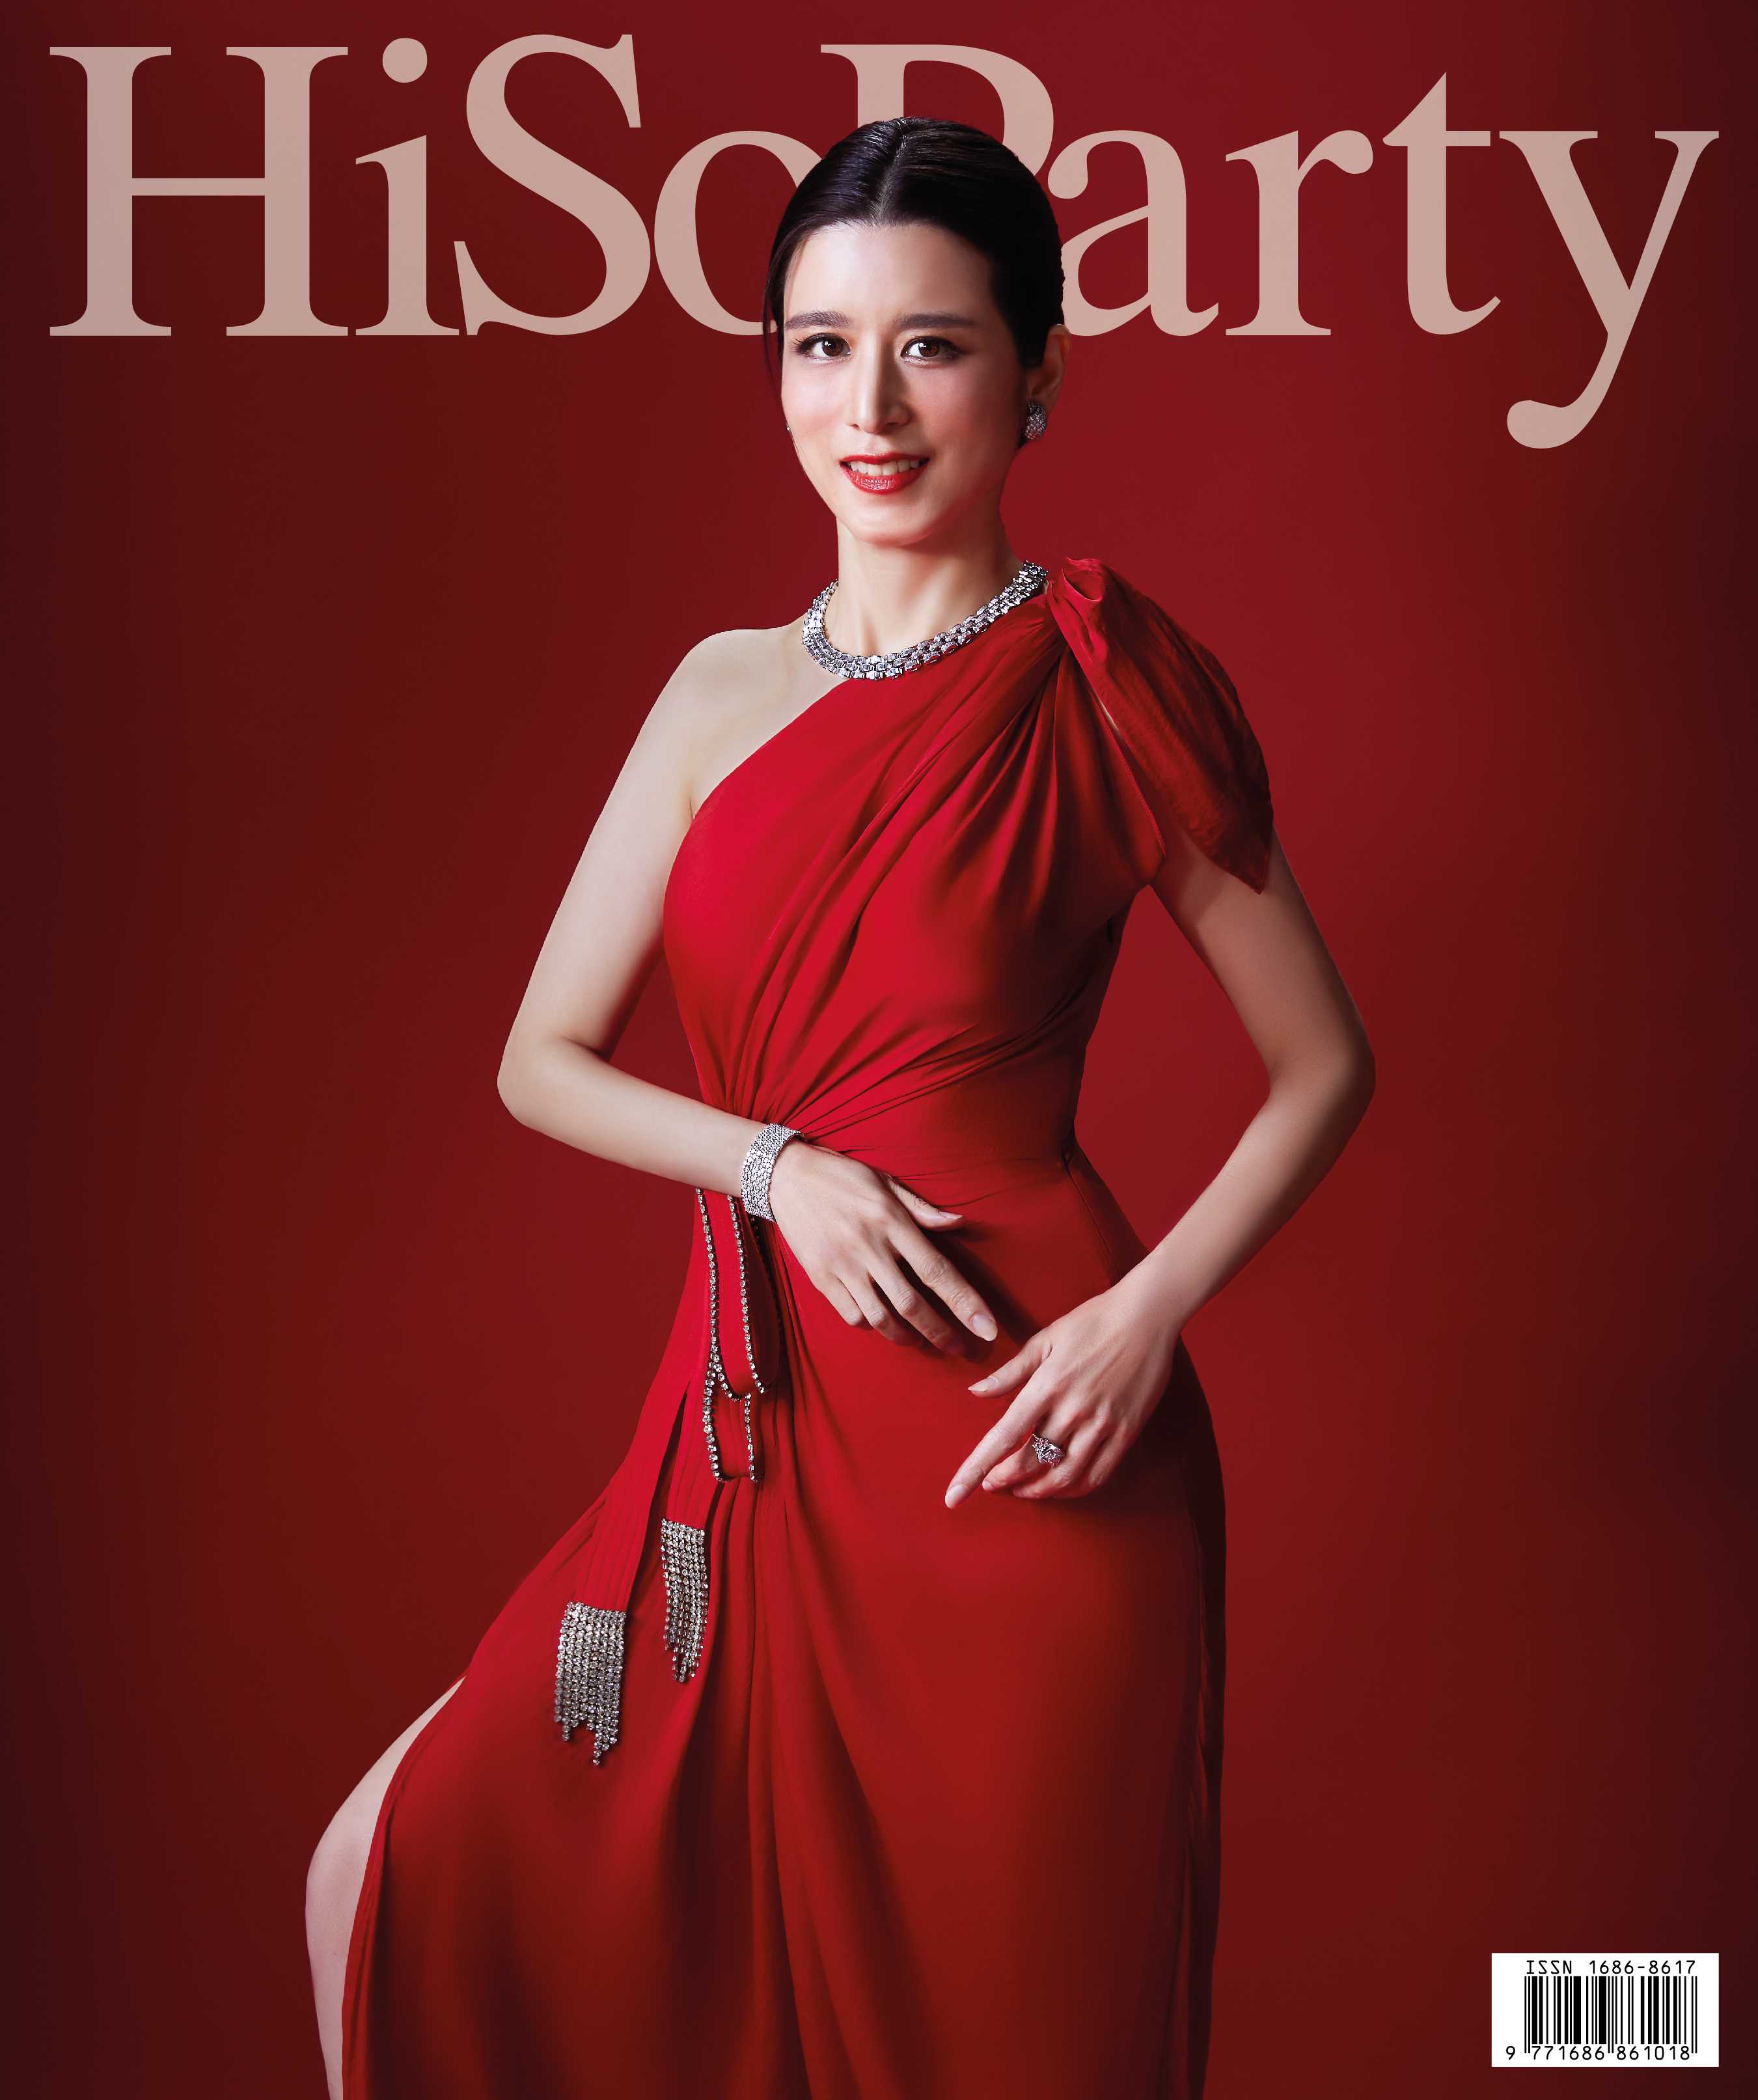 HiSoParty Magazine Vol.19 Issue 06 - 10/23 ฉบับเดือนตุลาคม 2566